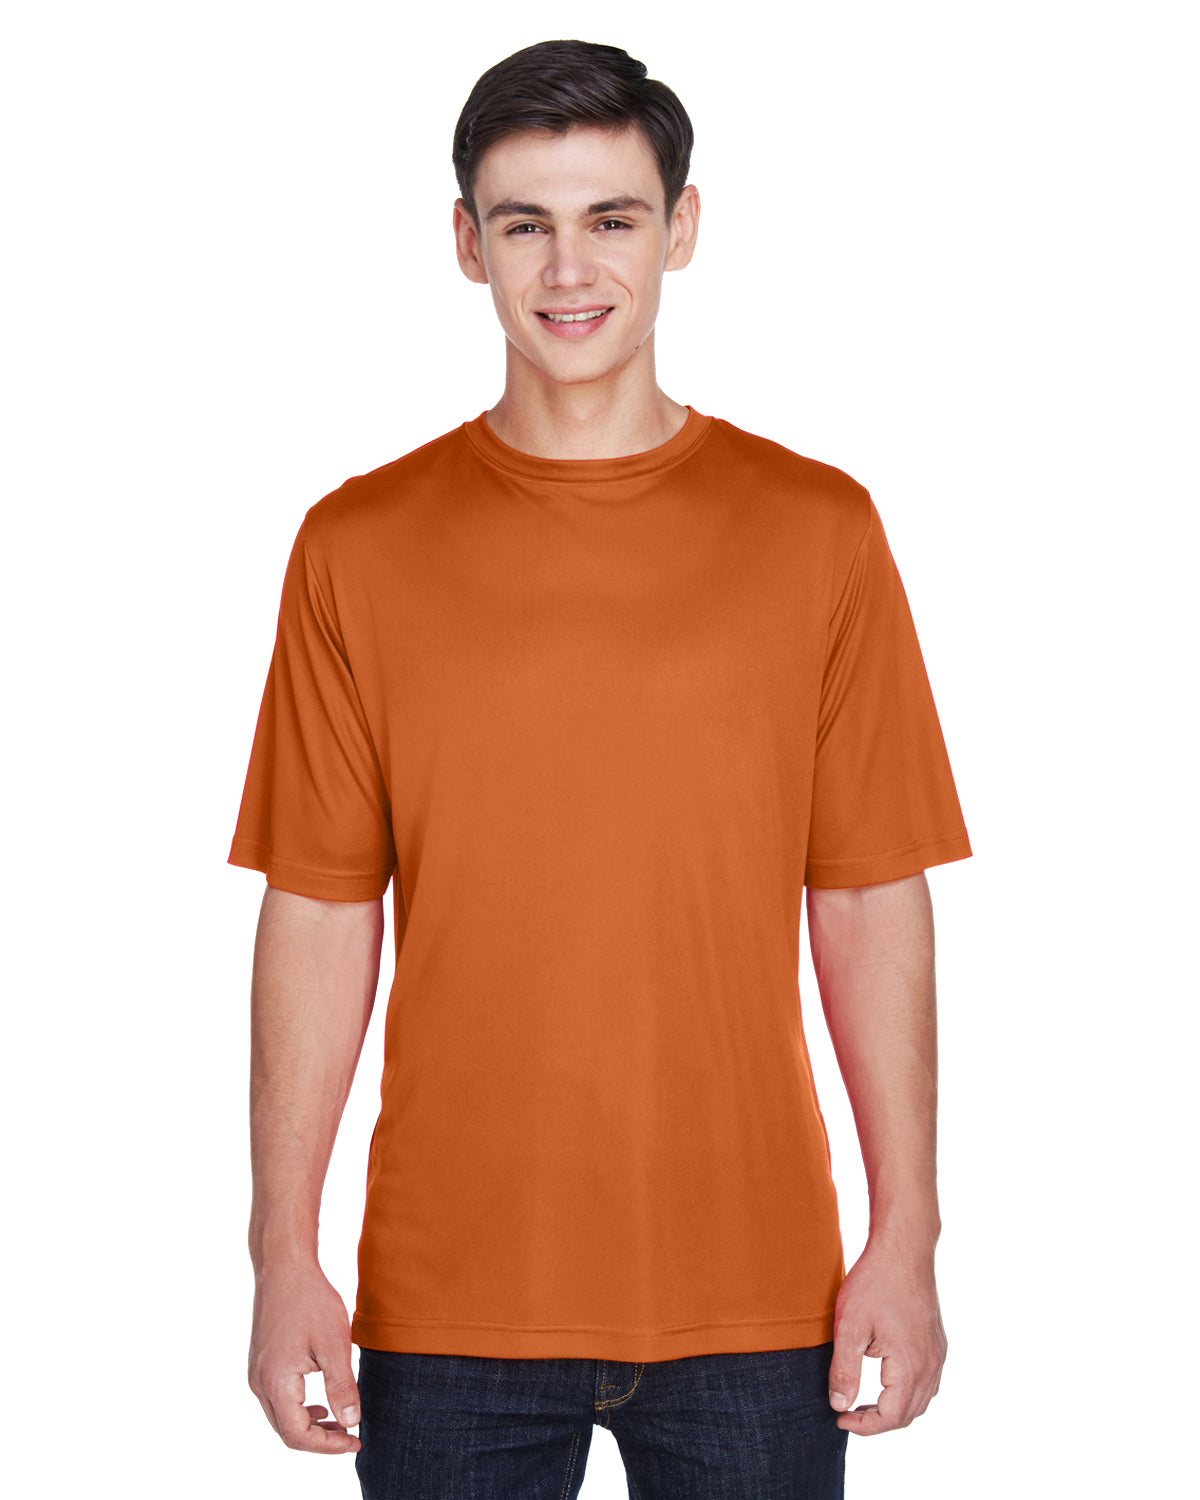 Sizing & Positioning for T-Shirts #CustomApparel #CustomTees #TShirts – HTV  Addicts